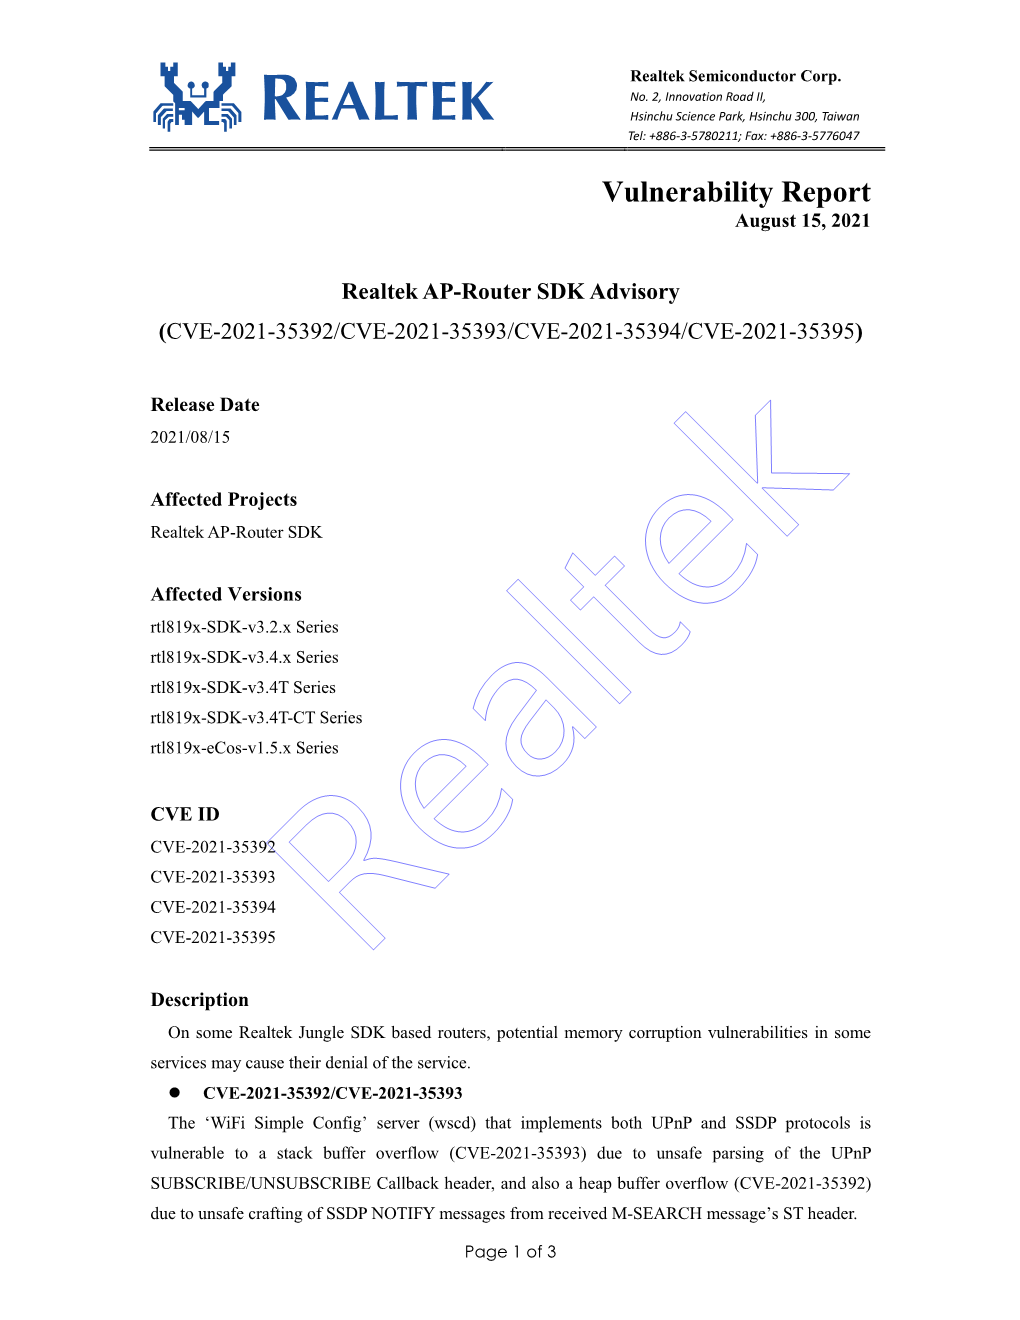 Realtek AP Router SDK Vulnerabilities